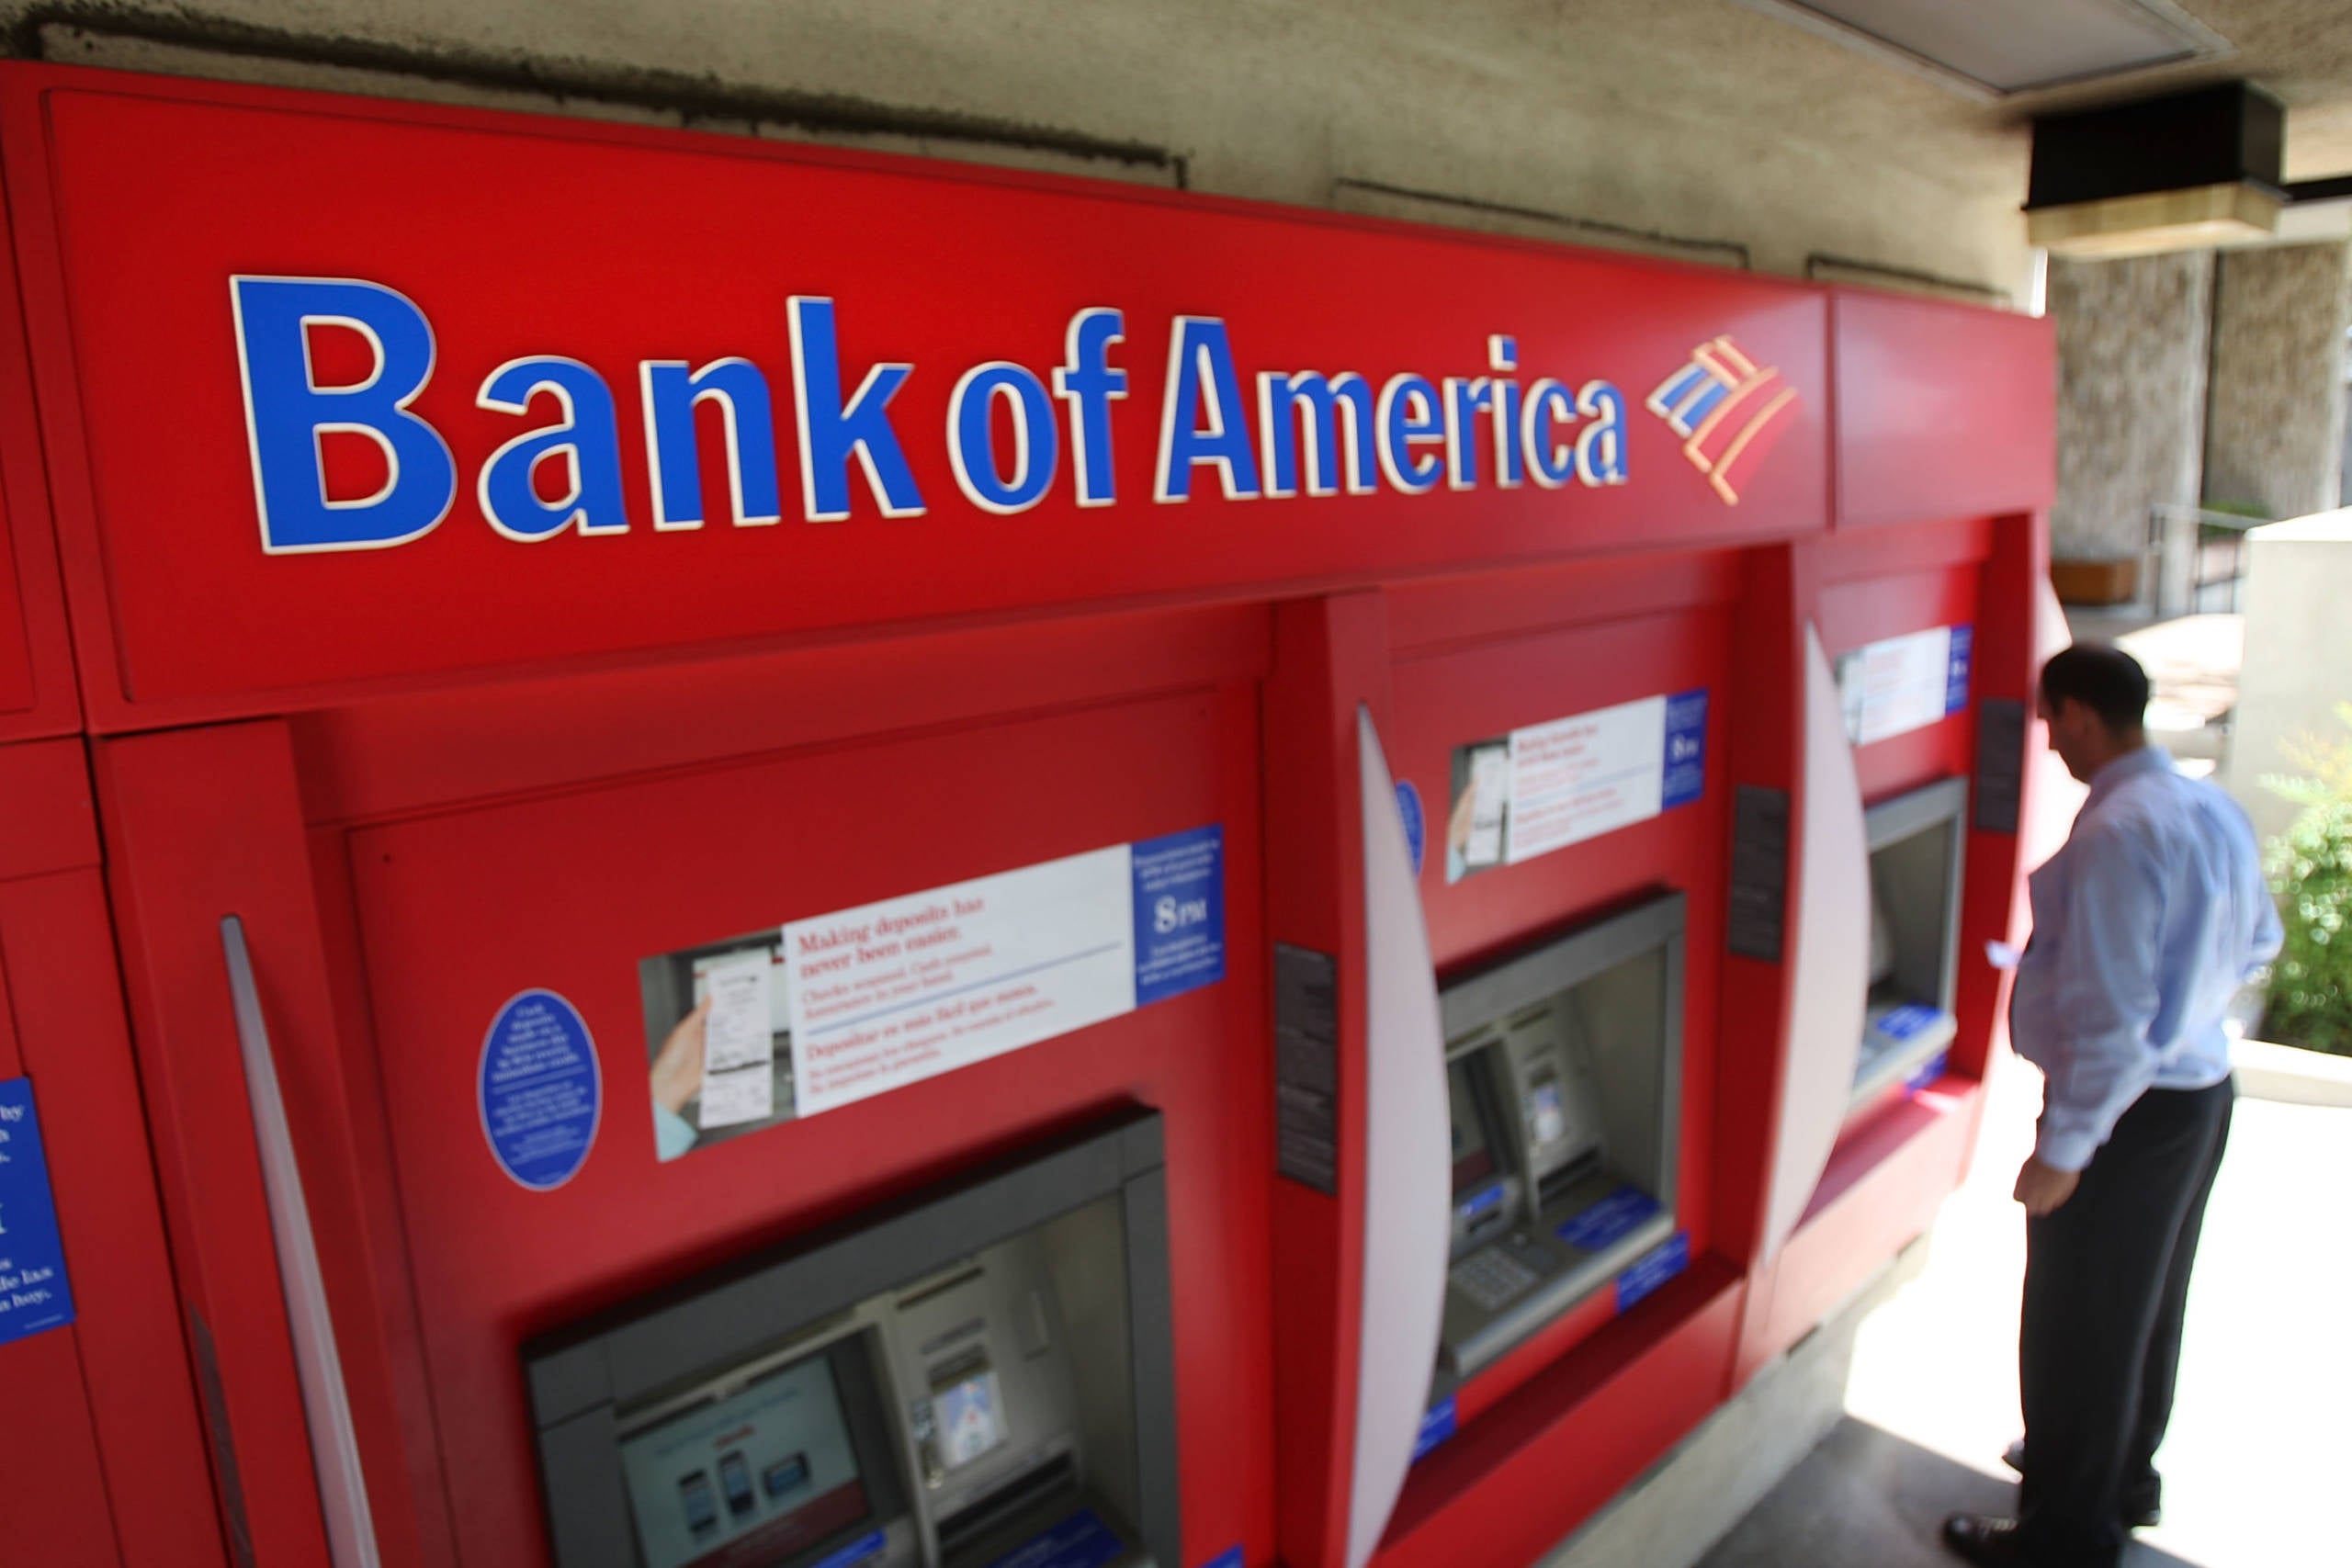 5 reasons to get the Bank of America Premium Rewards credit card